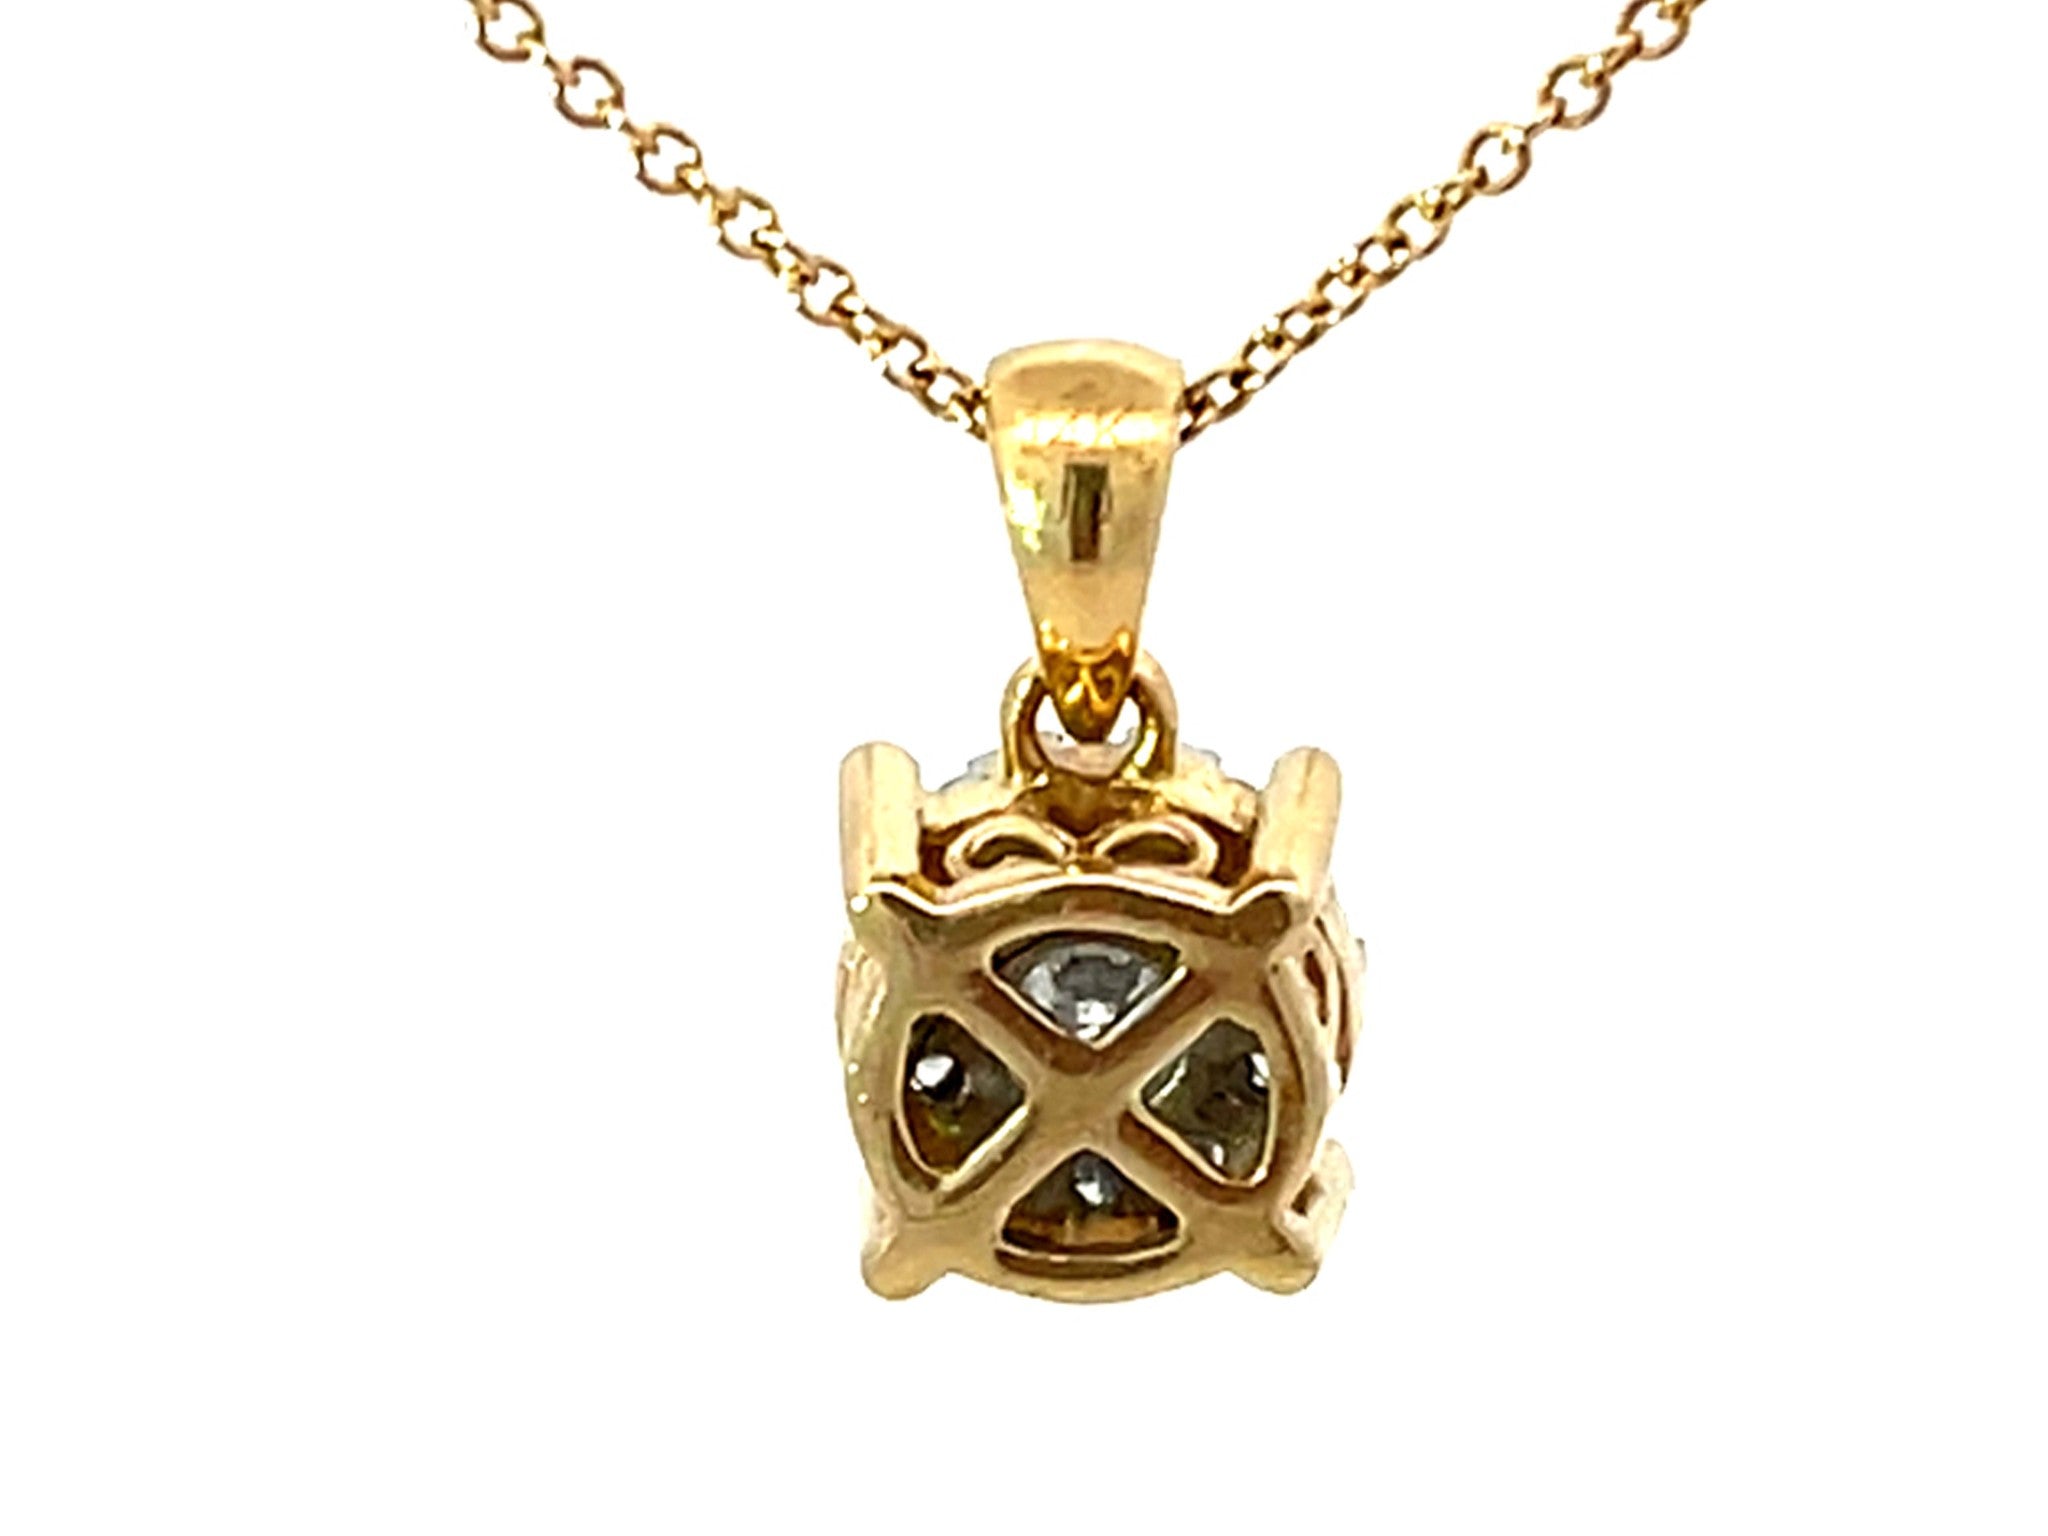 Solid Gold Diamond Halo Pendant Necklace